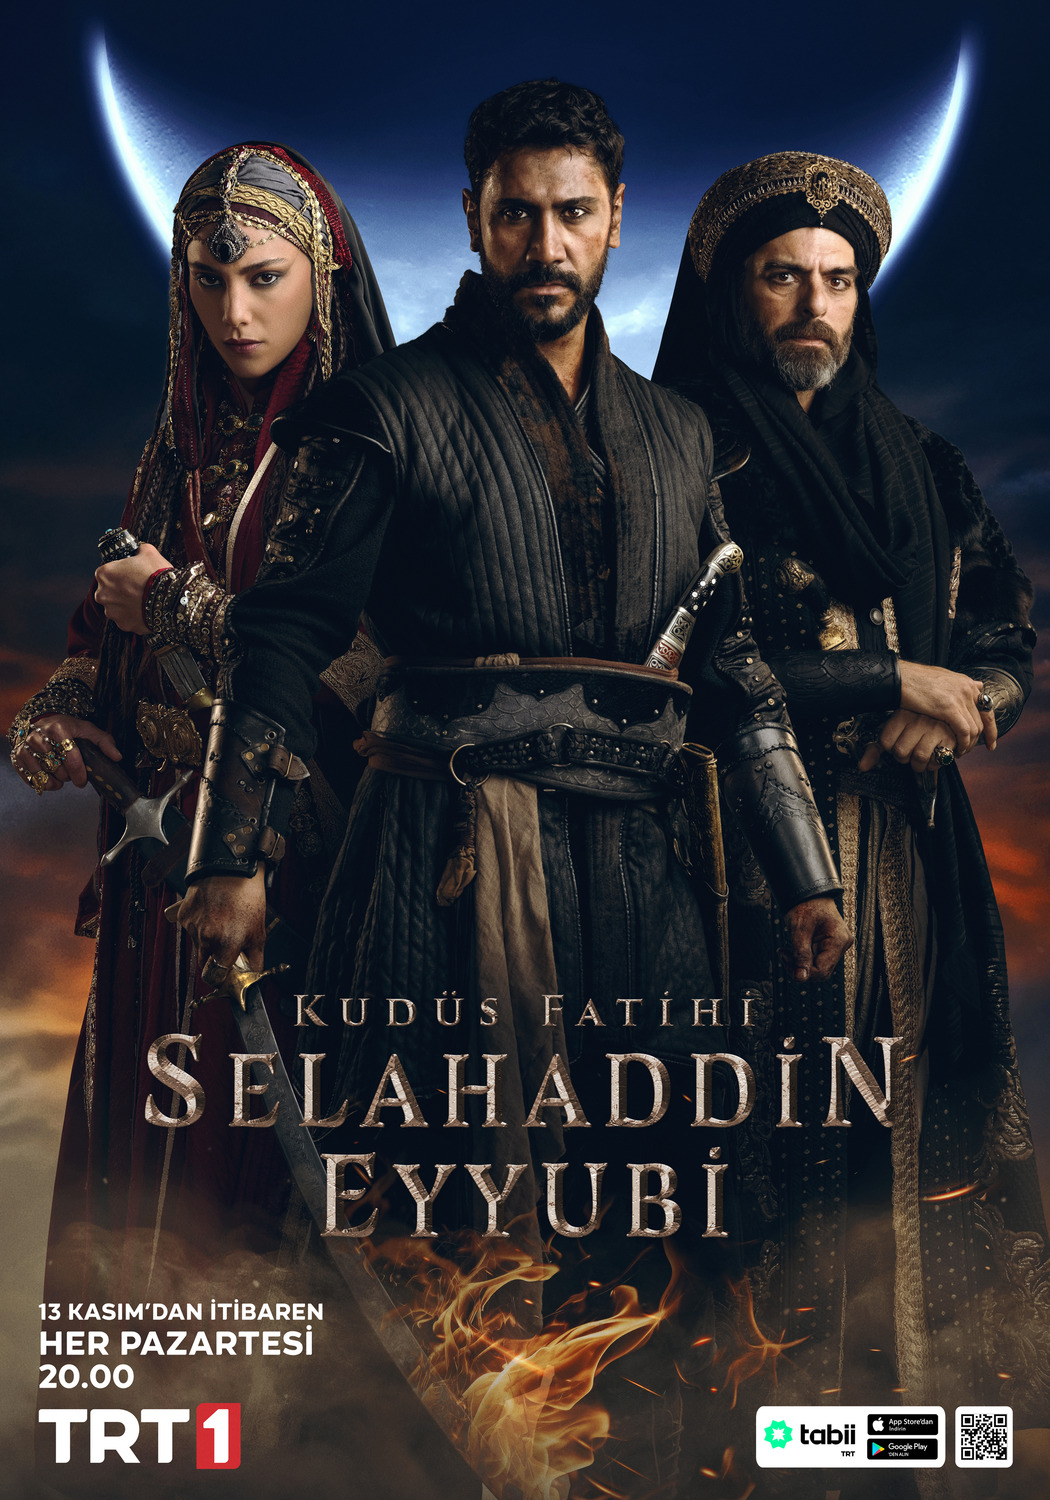 Extra Large TV Poster Image for Kudüs Fatihi: Selahaddin Eyyubi (#3 of 4)